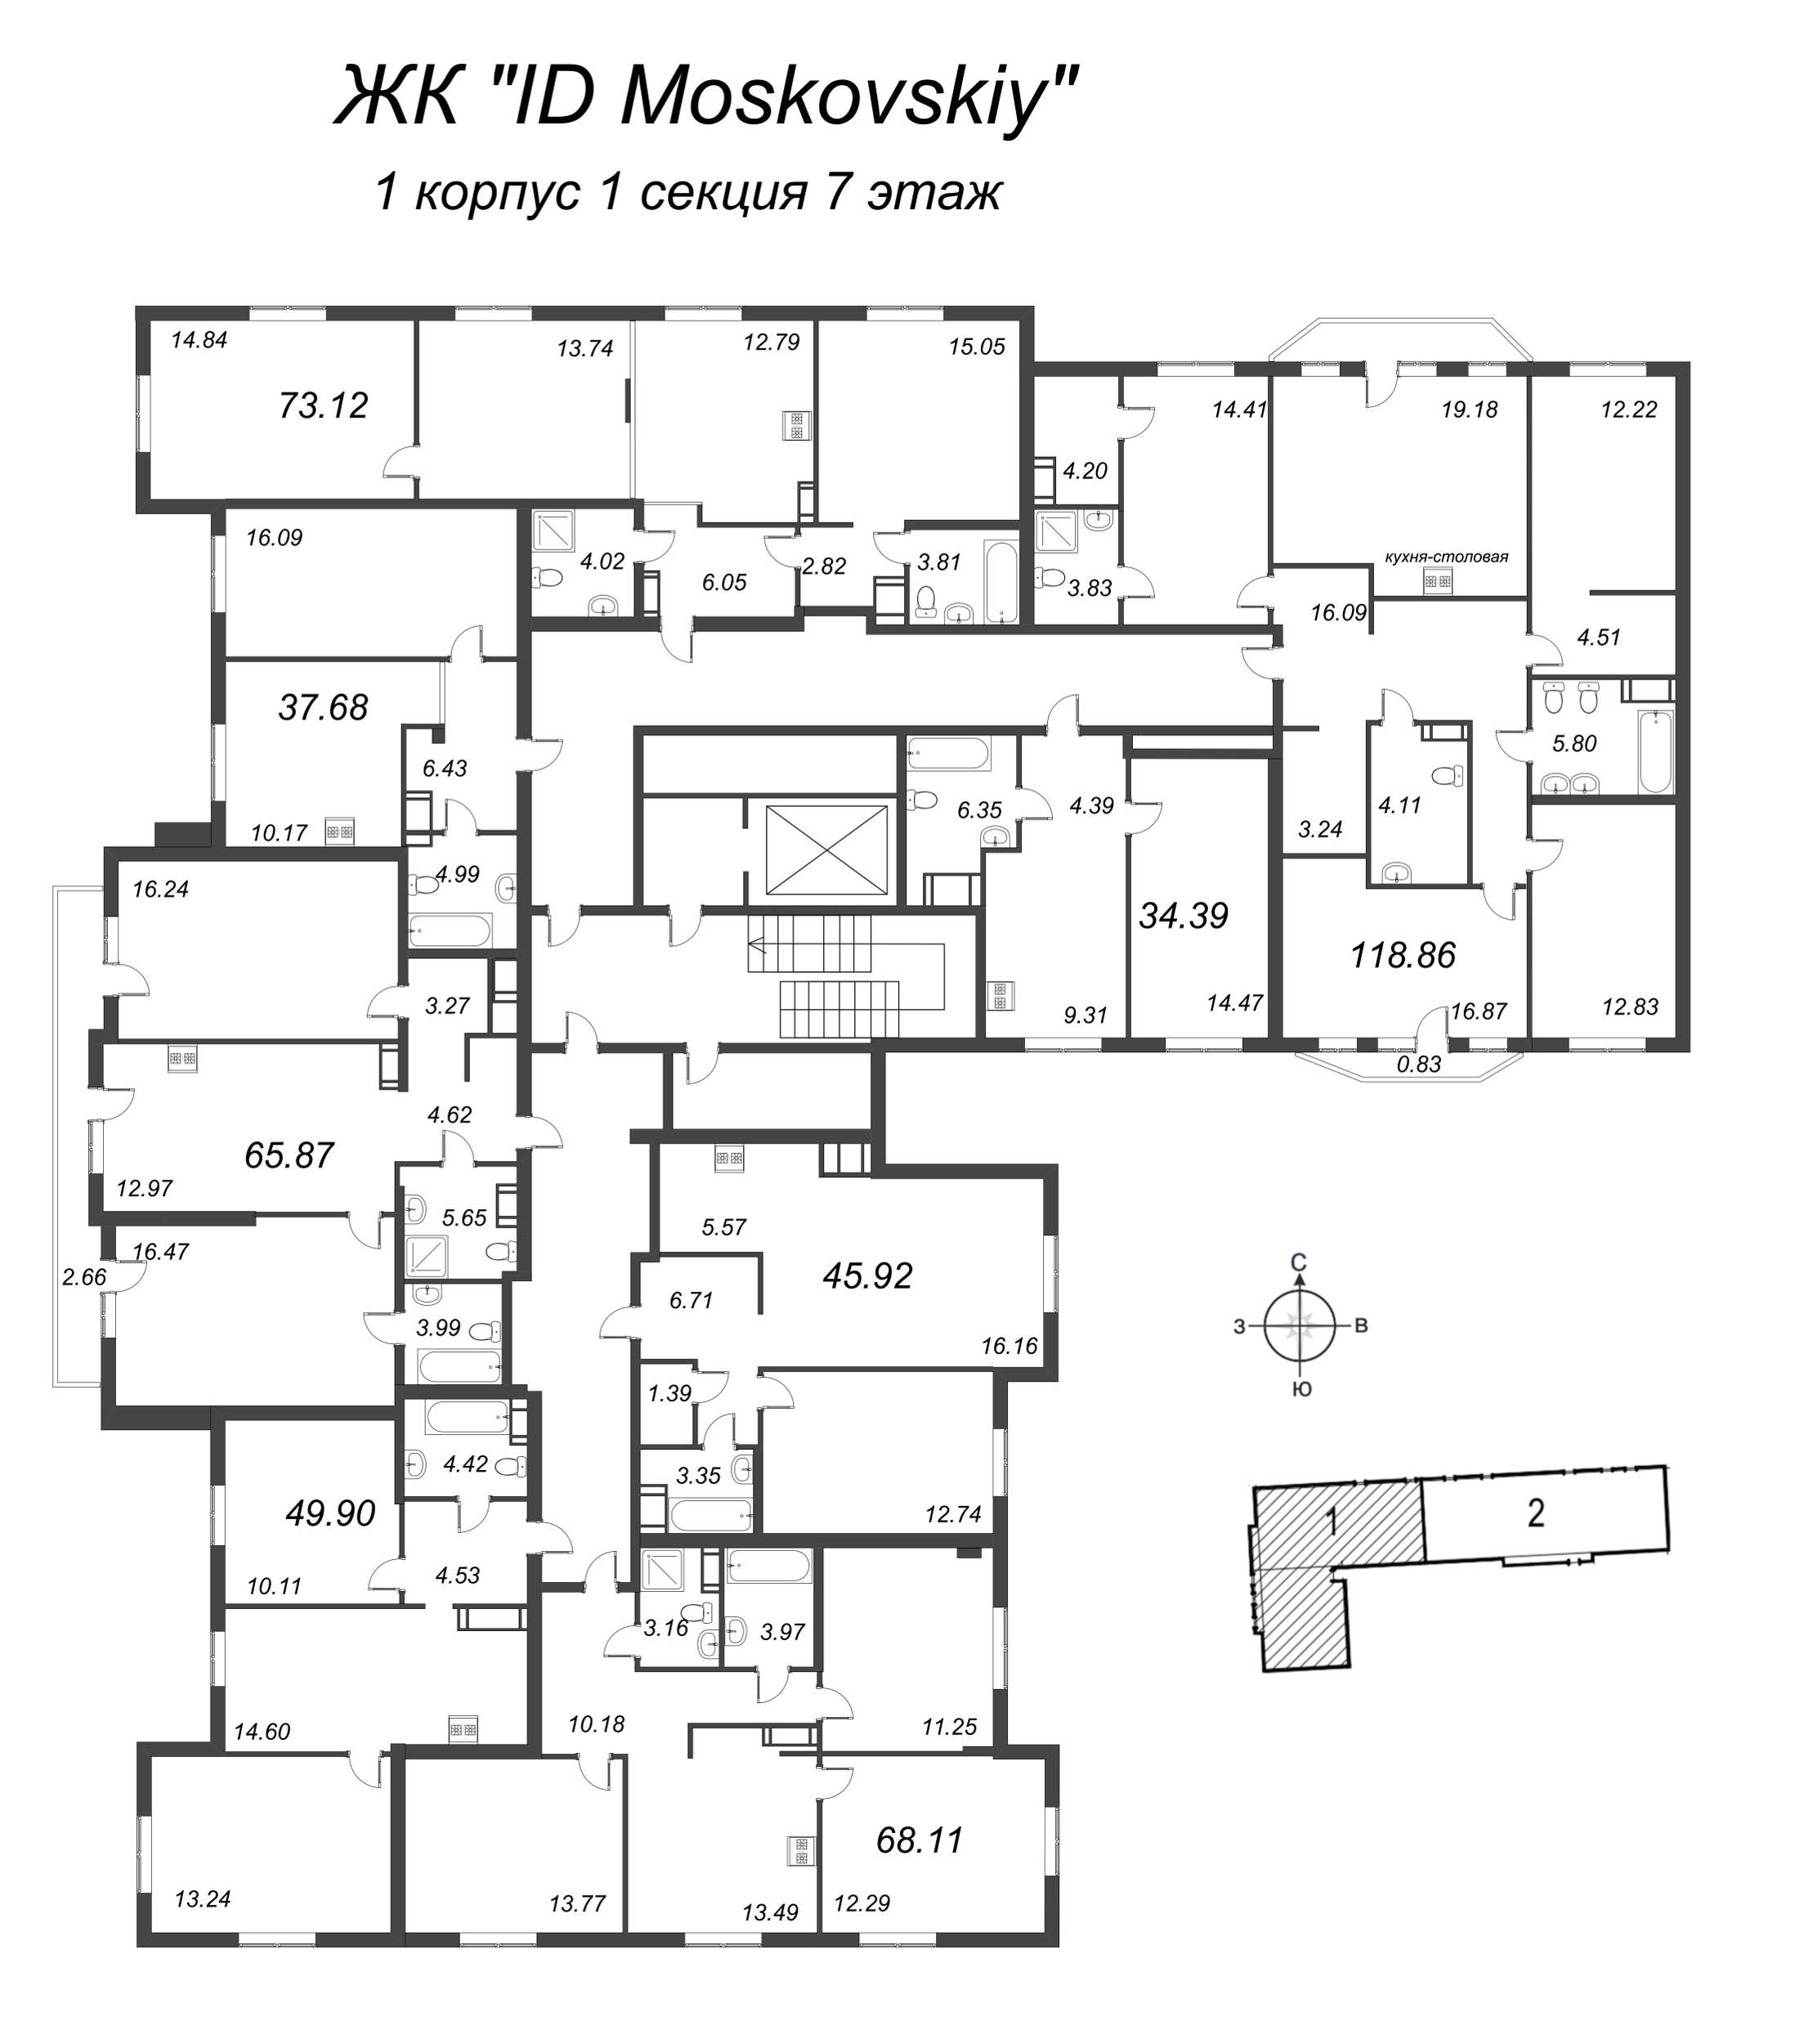 3-комнатная (Евро) квартира, 73.12 м² - планировка этажа